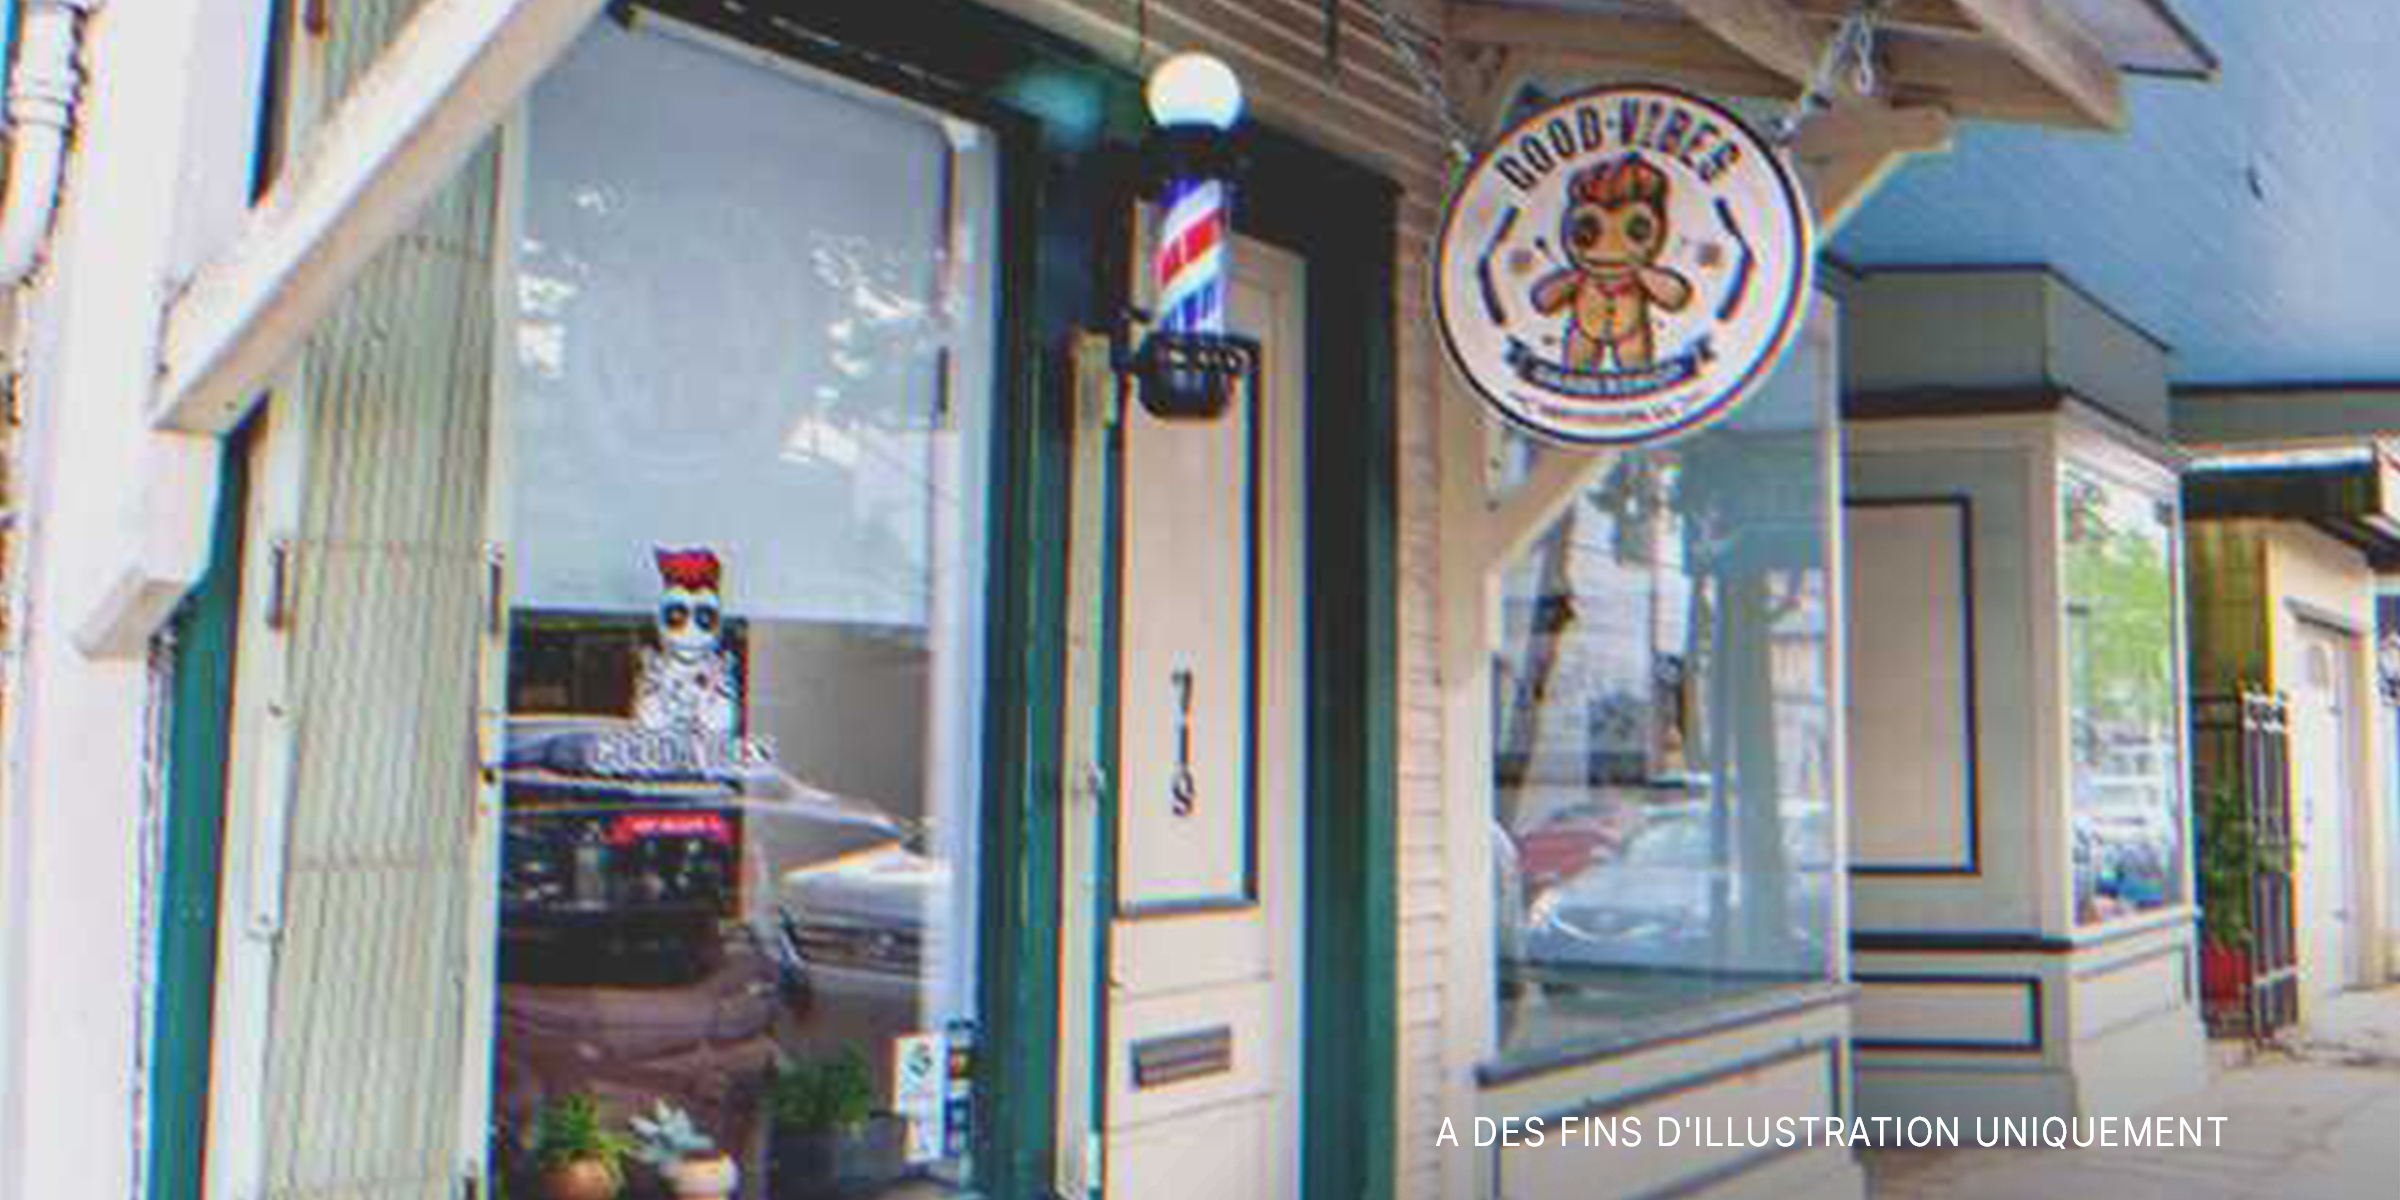 Un salon de coiffure | Source : Shutterstock